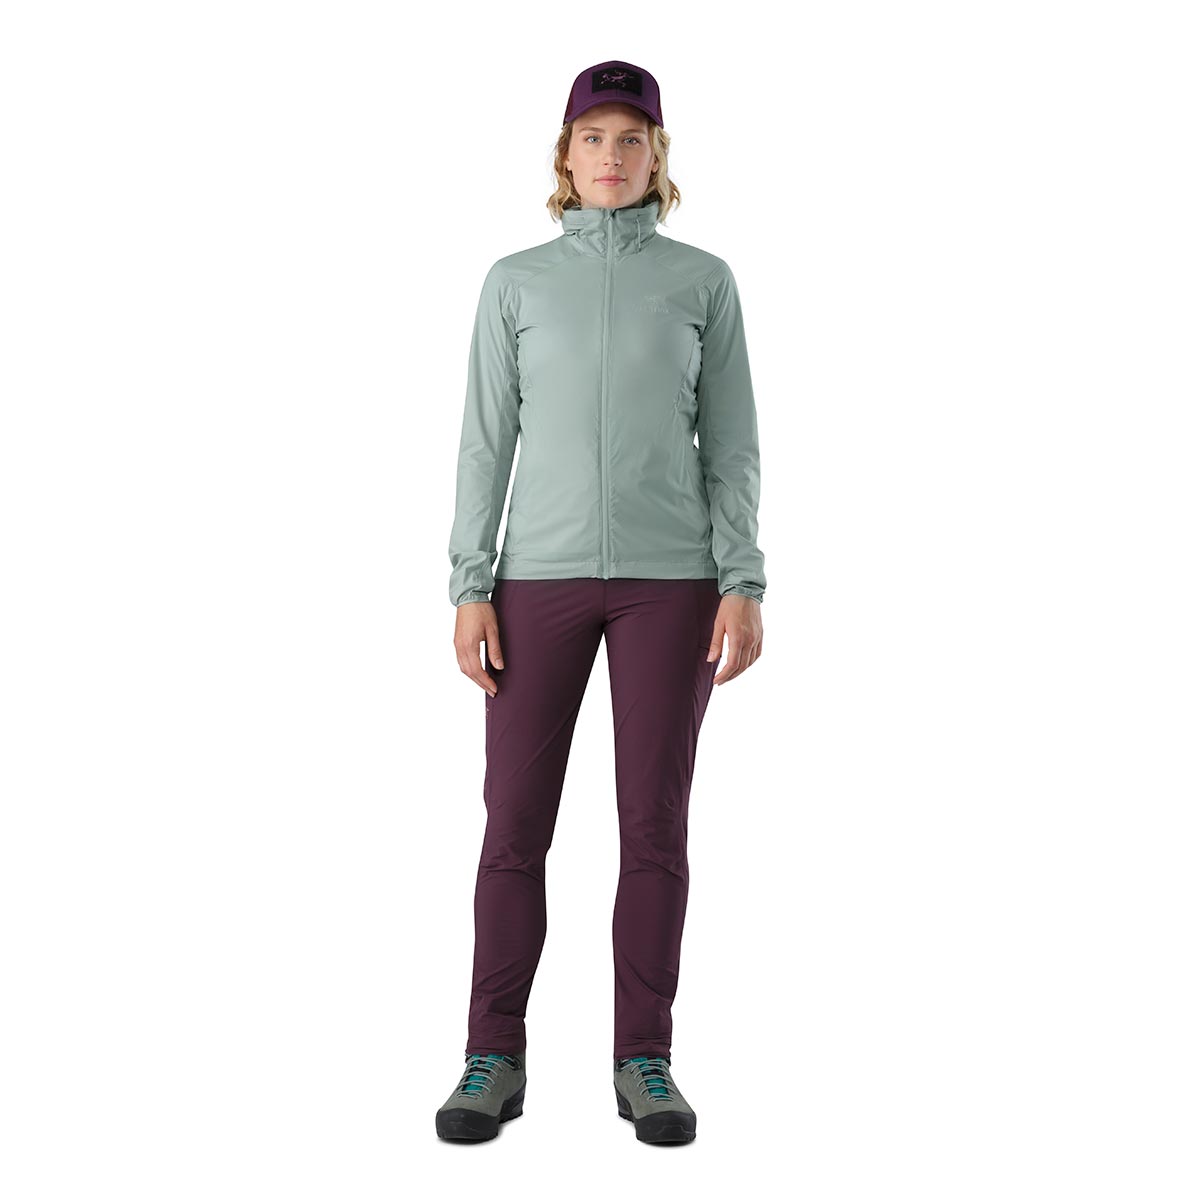 Arc'teryx Nodin Jacket, women's, discontinued Spring 2017 colors (free